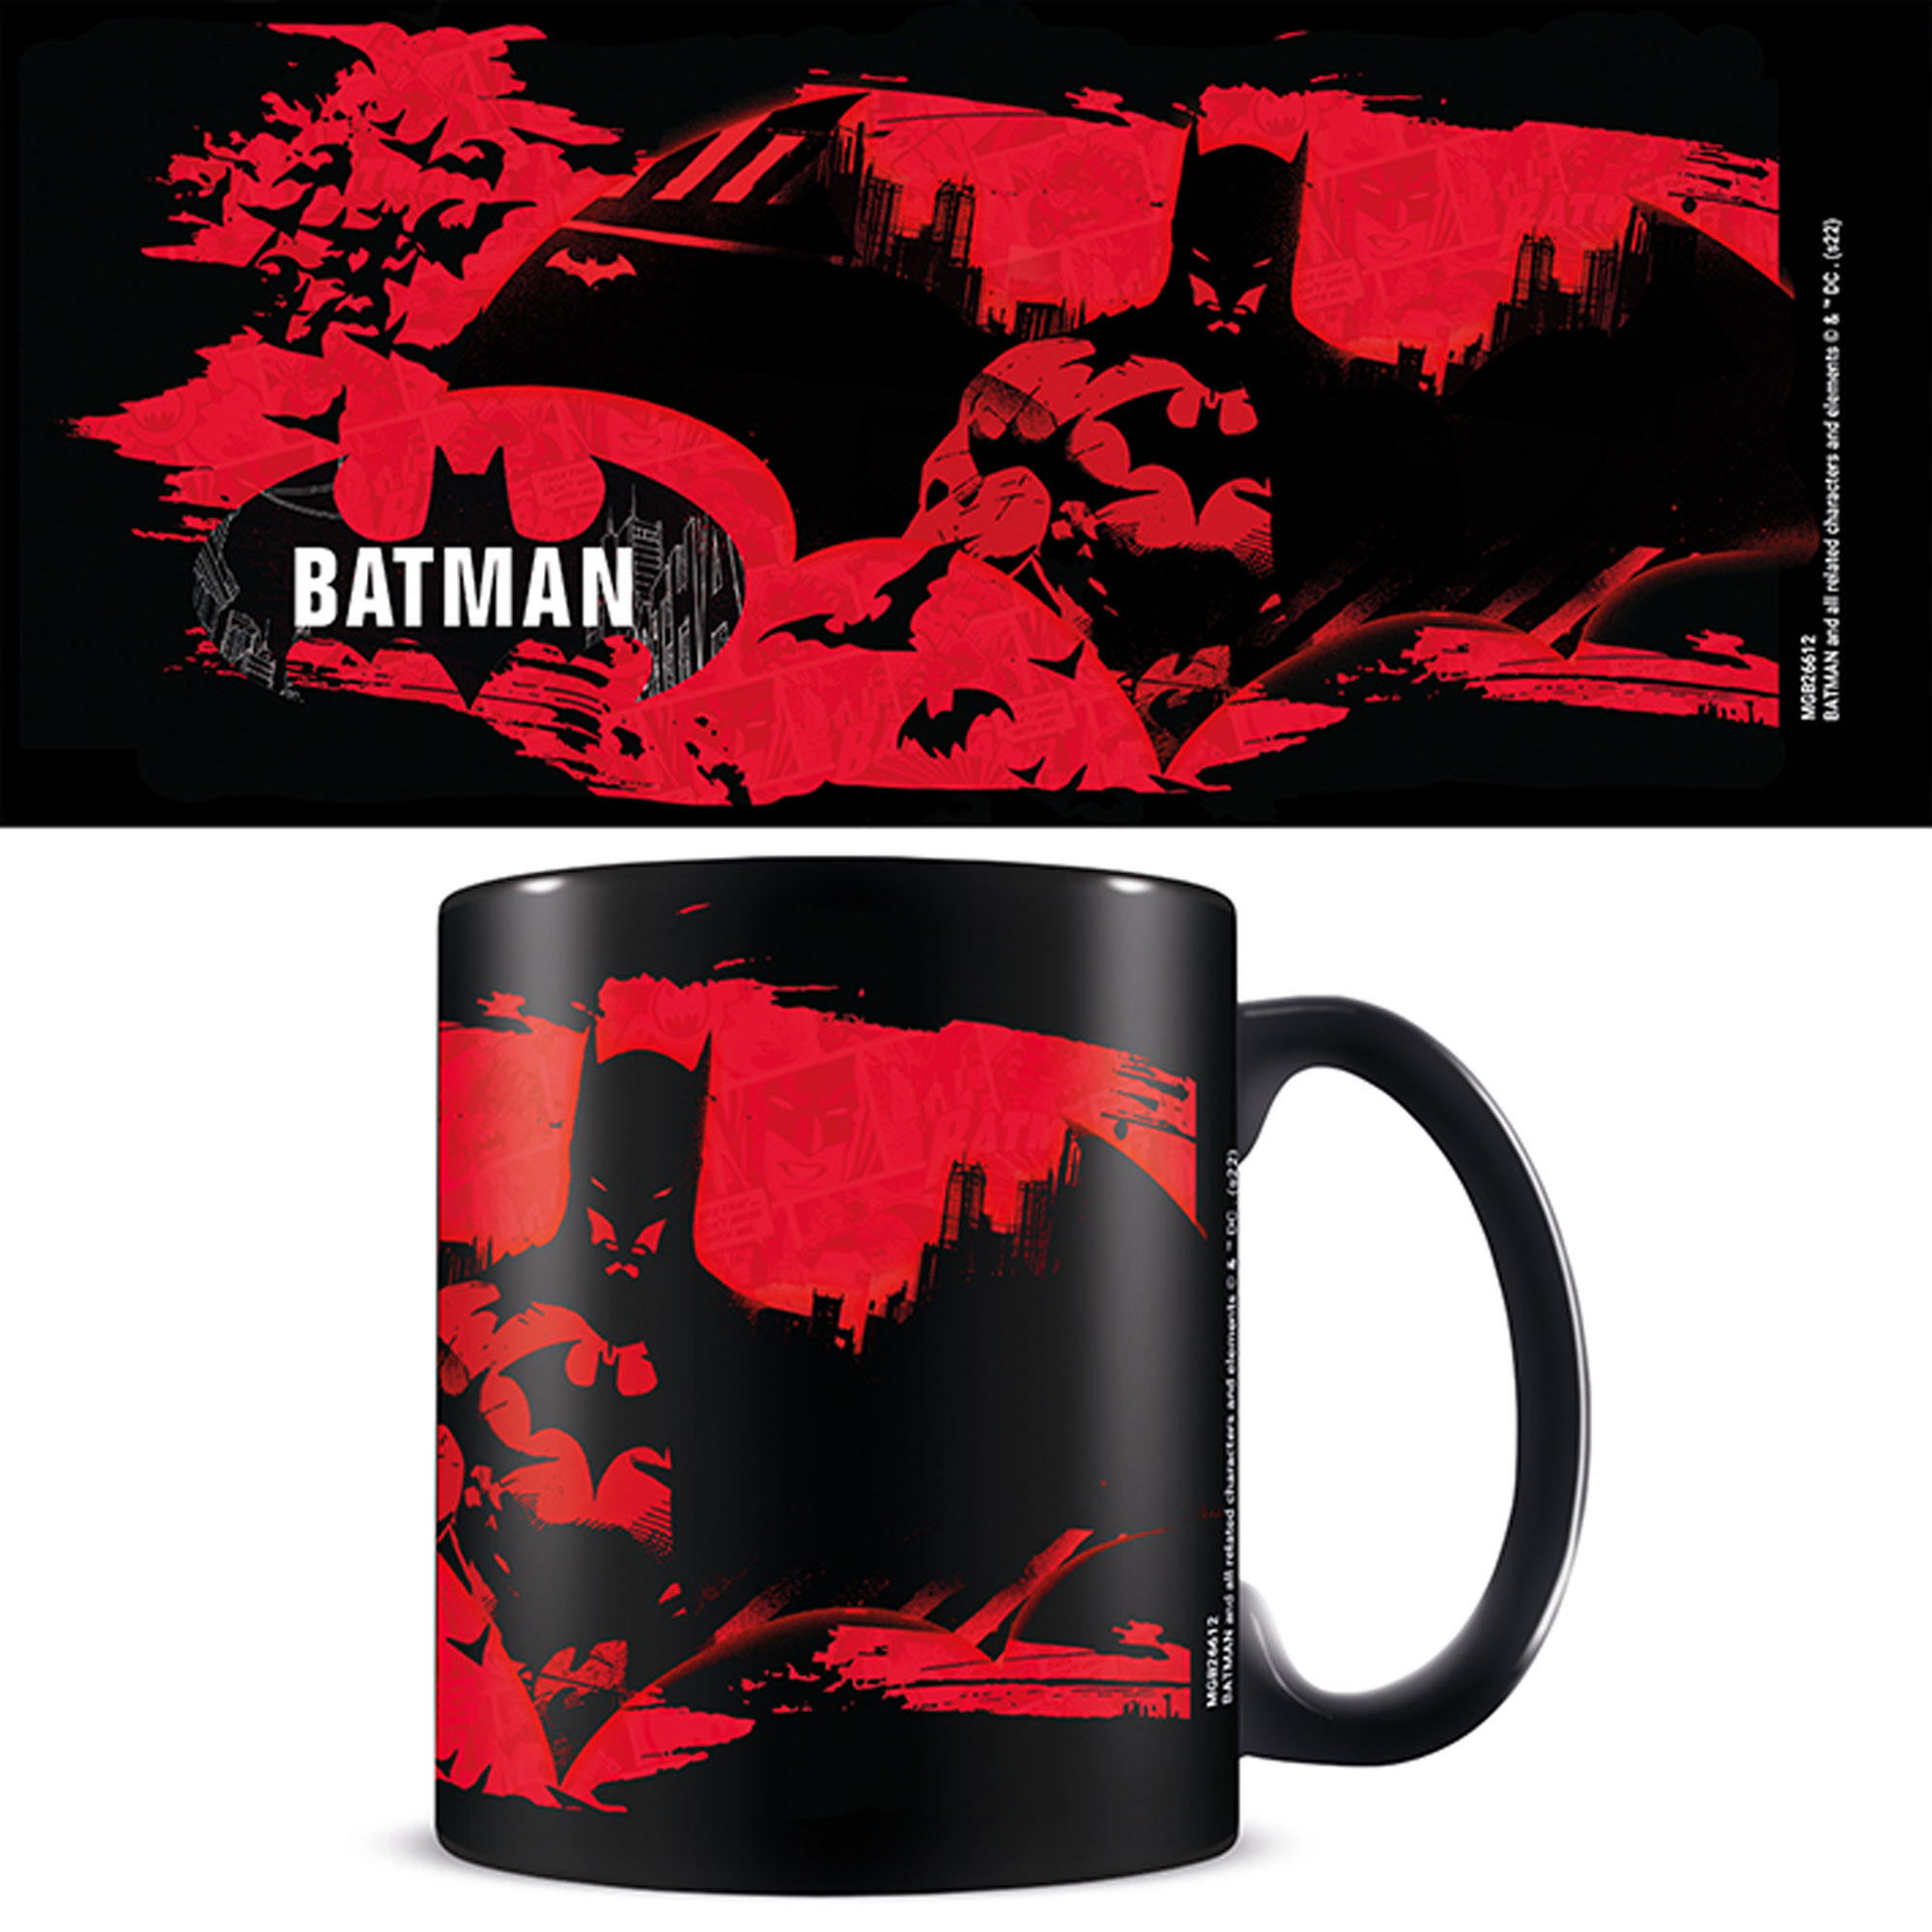 Batman - Red black - Mug